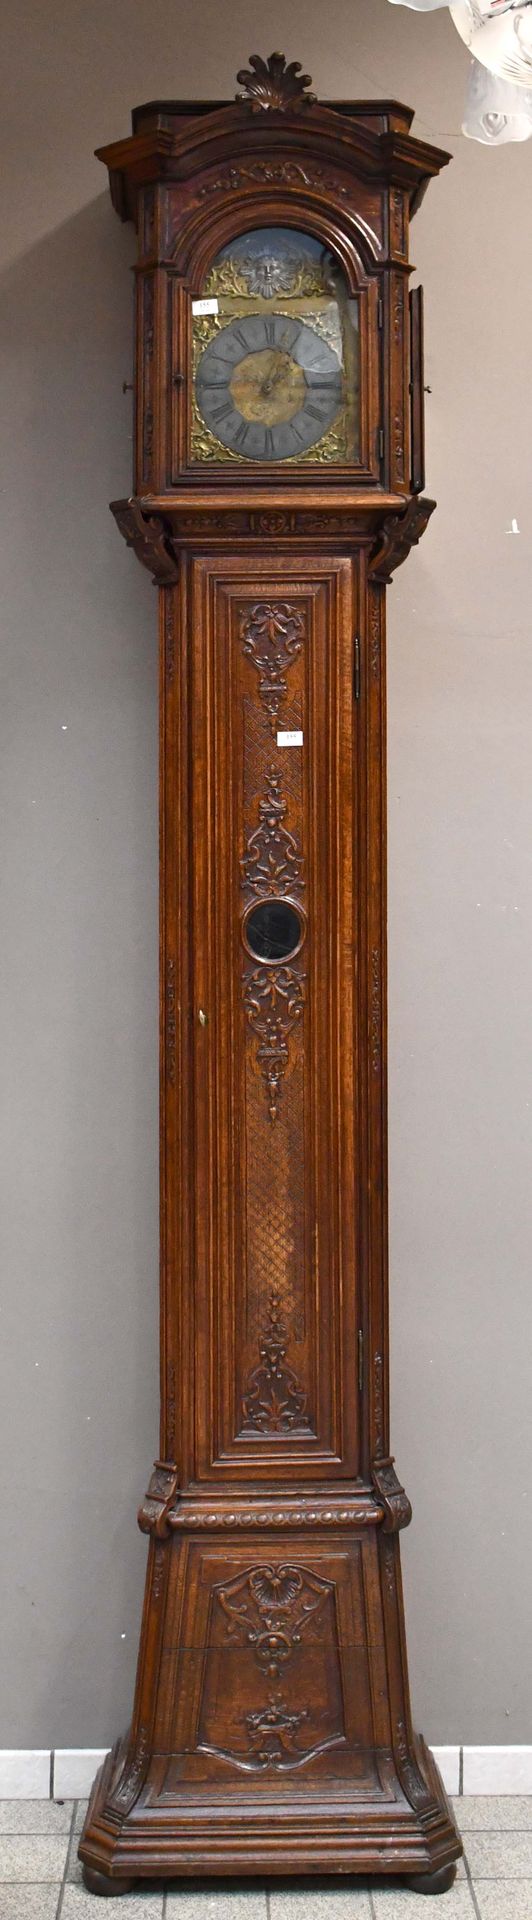 Null 摄政时期风格的精细列日镶木钟，斜面雕刻的橡木。